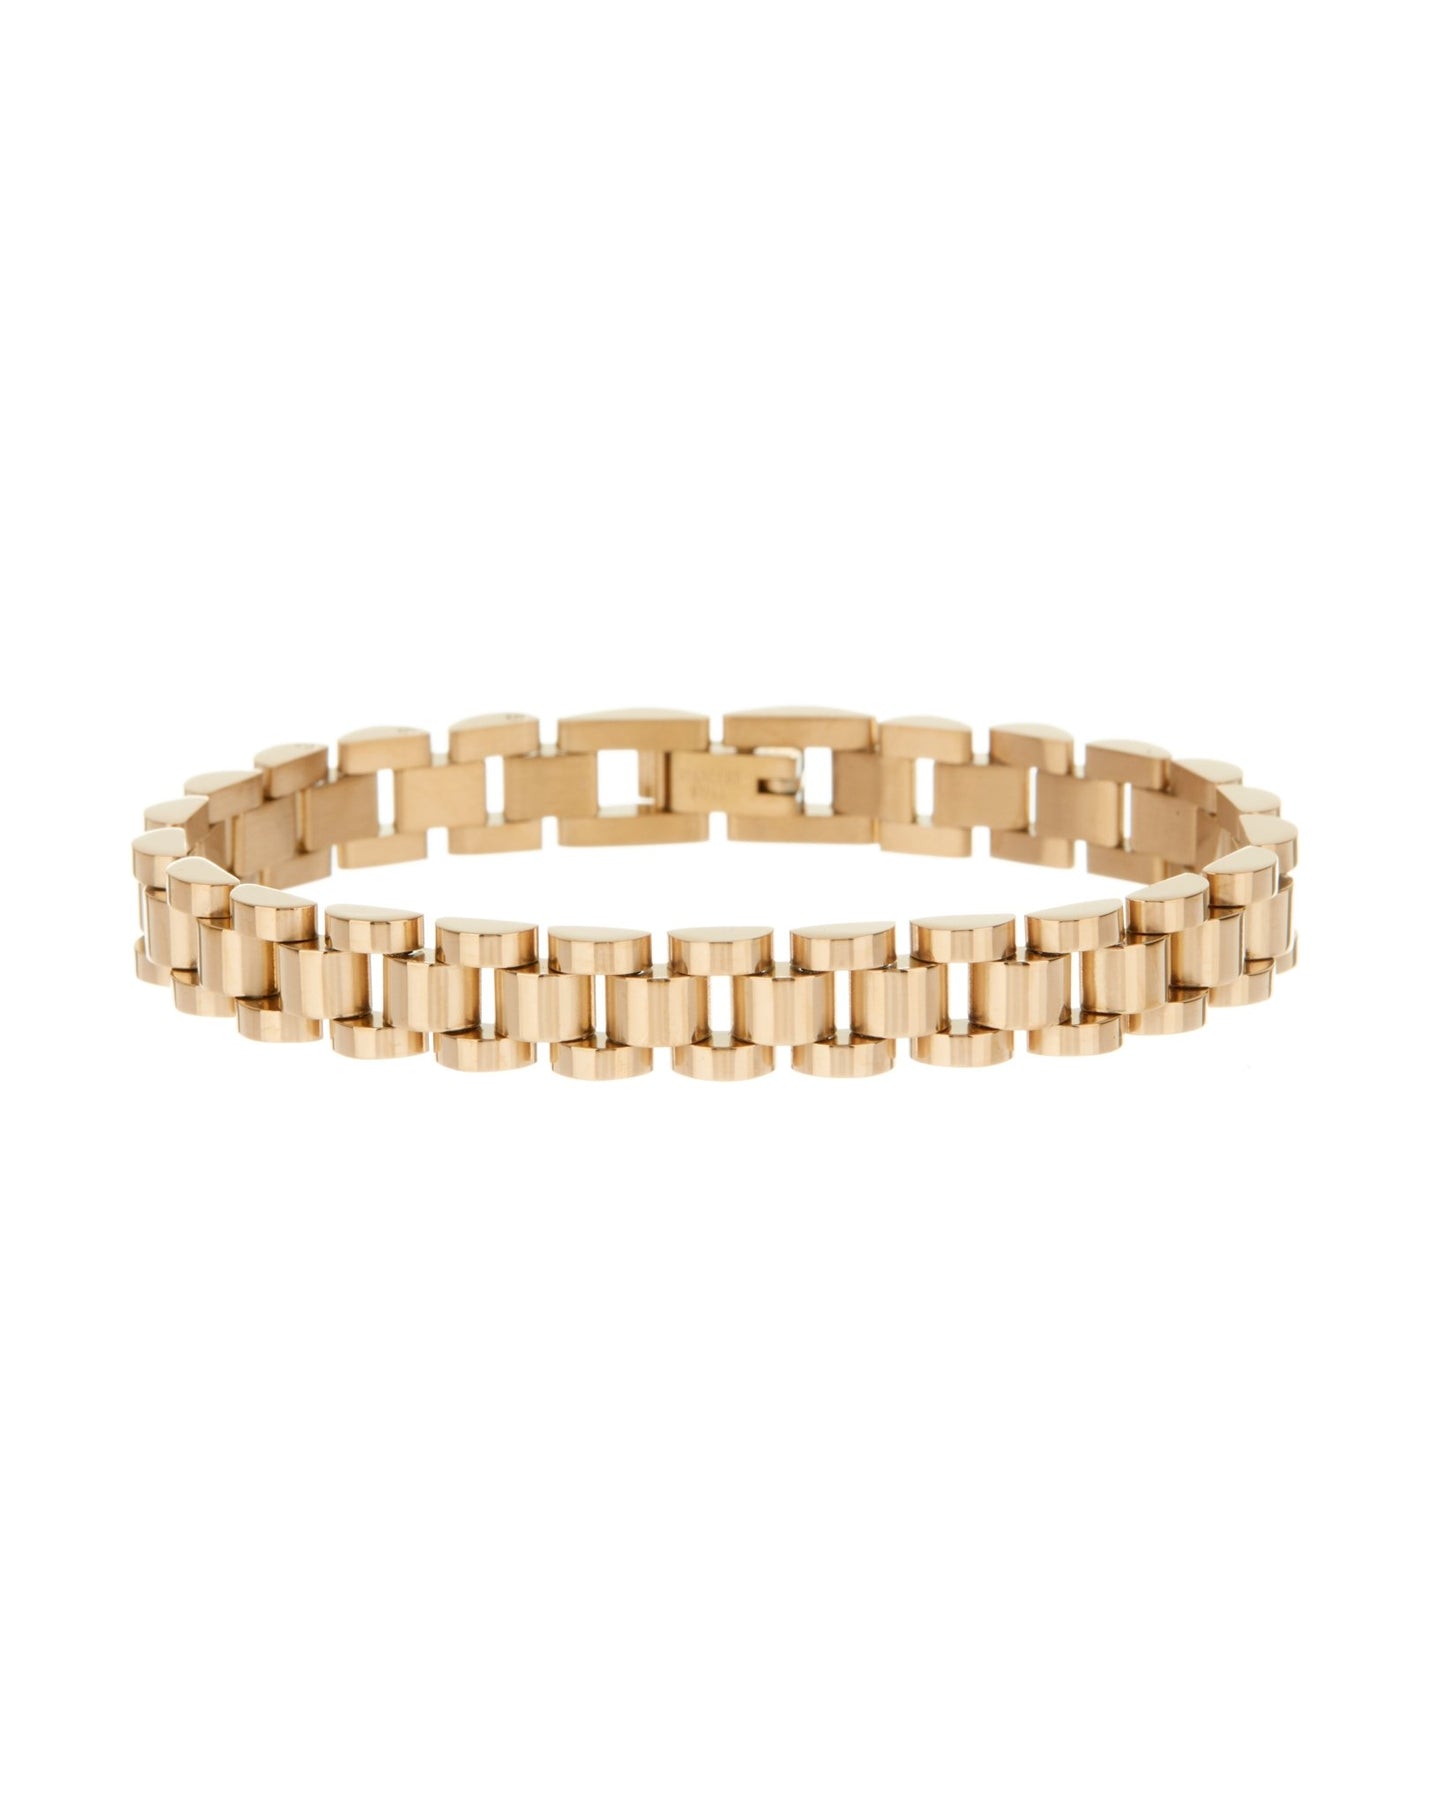 Gold Timepiece Bracelet - Something about Sofia